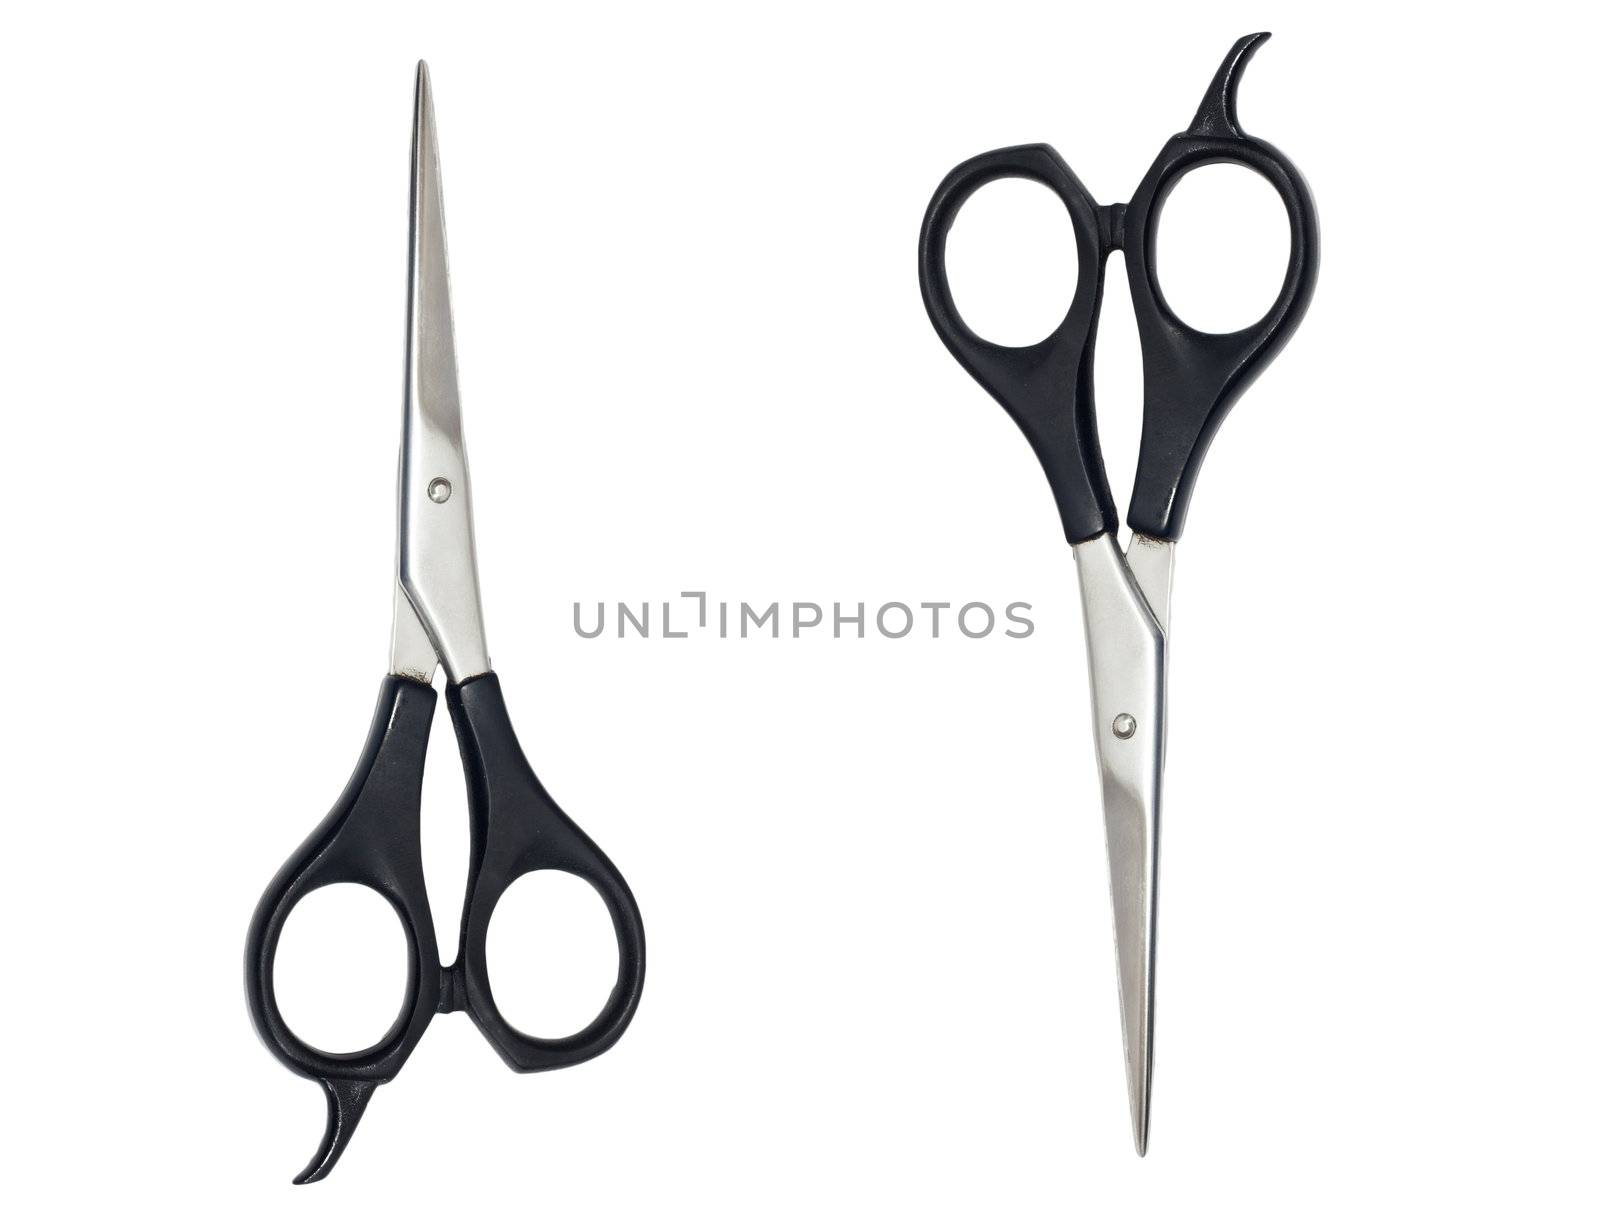 Professional Haircutting Scissors. Studio isolation on white.  by schankz